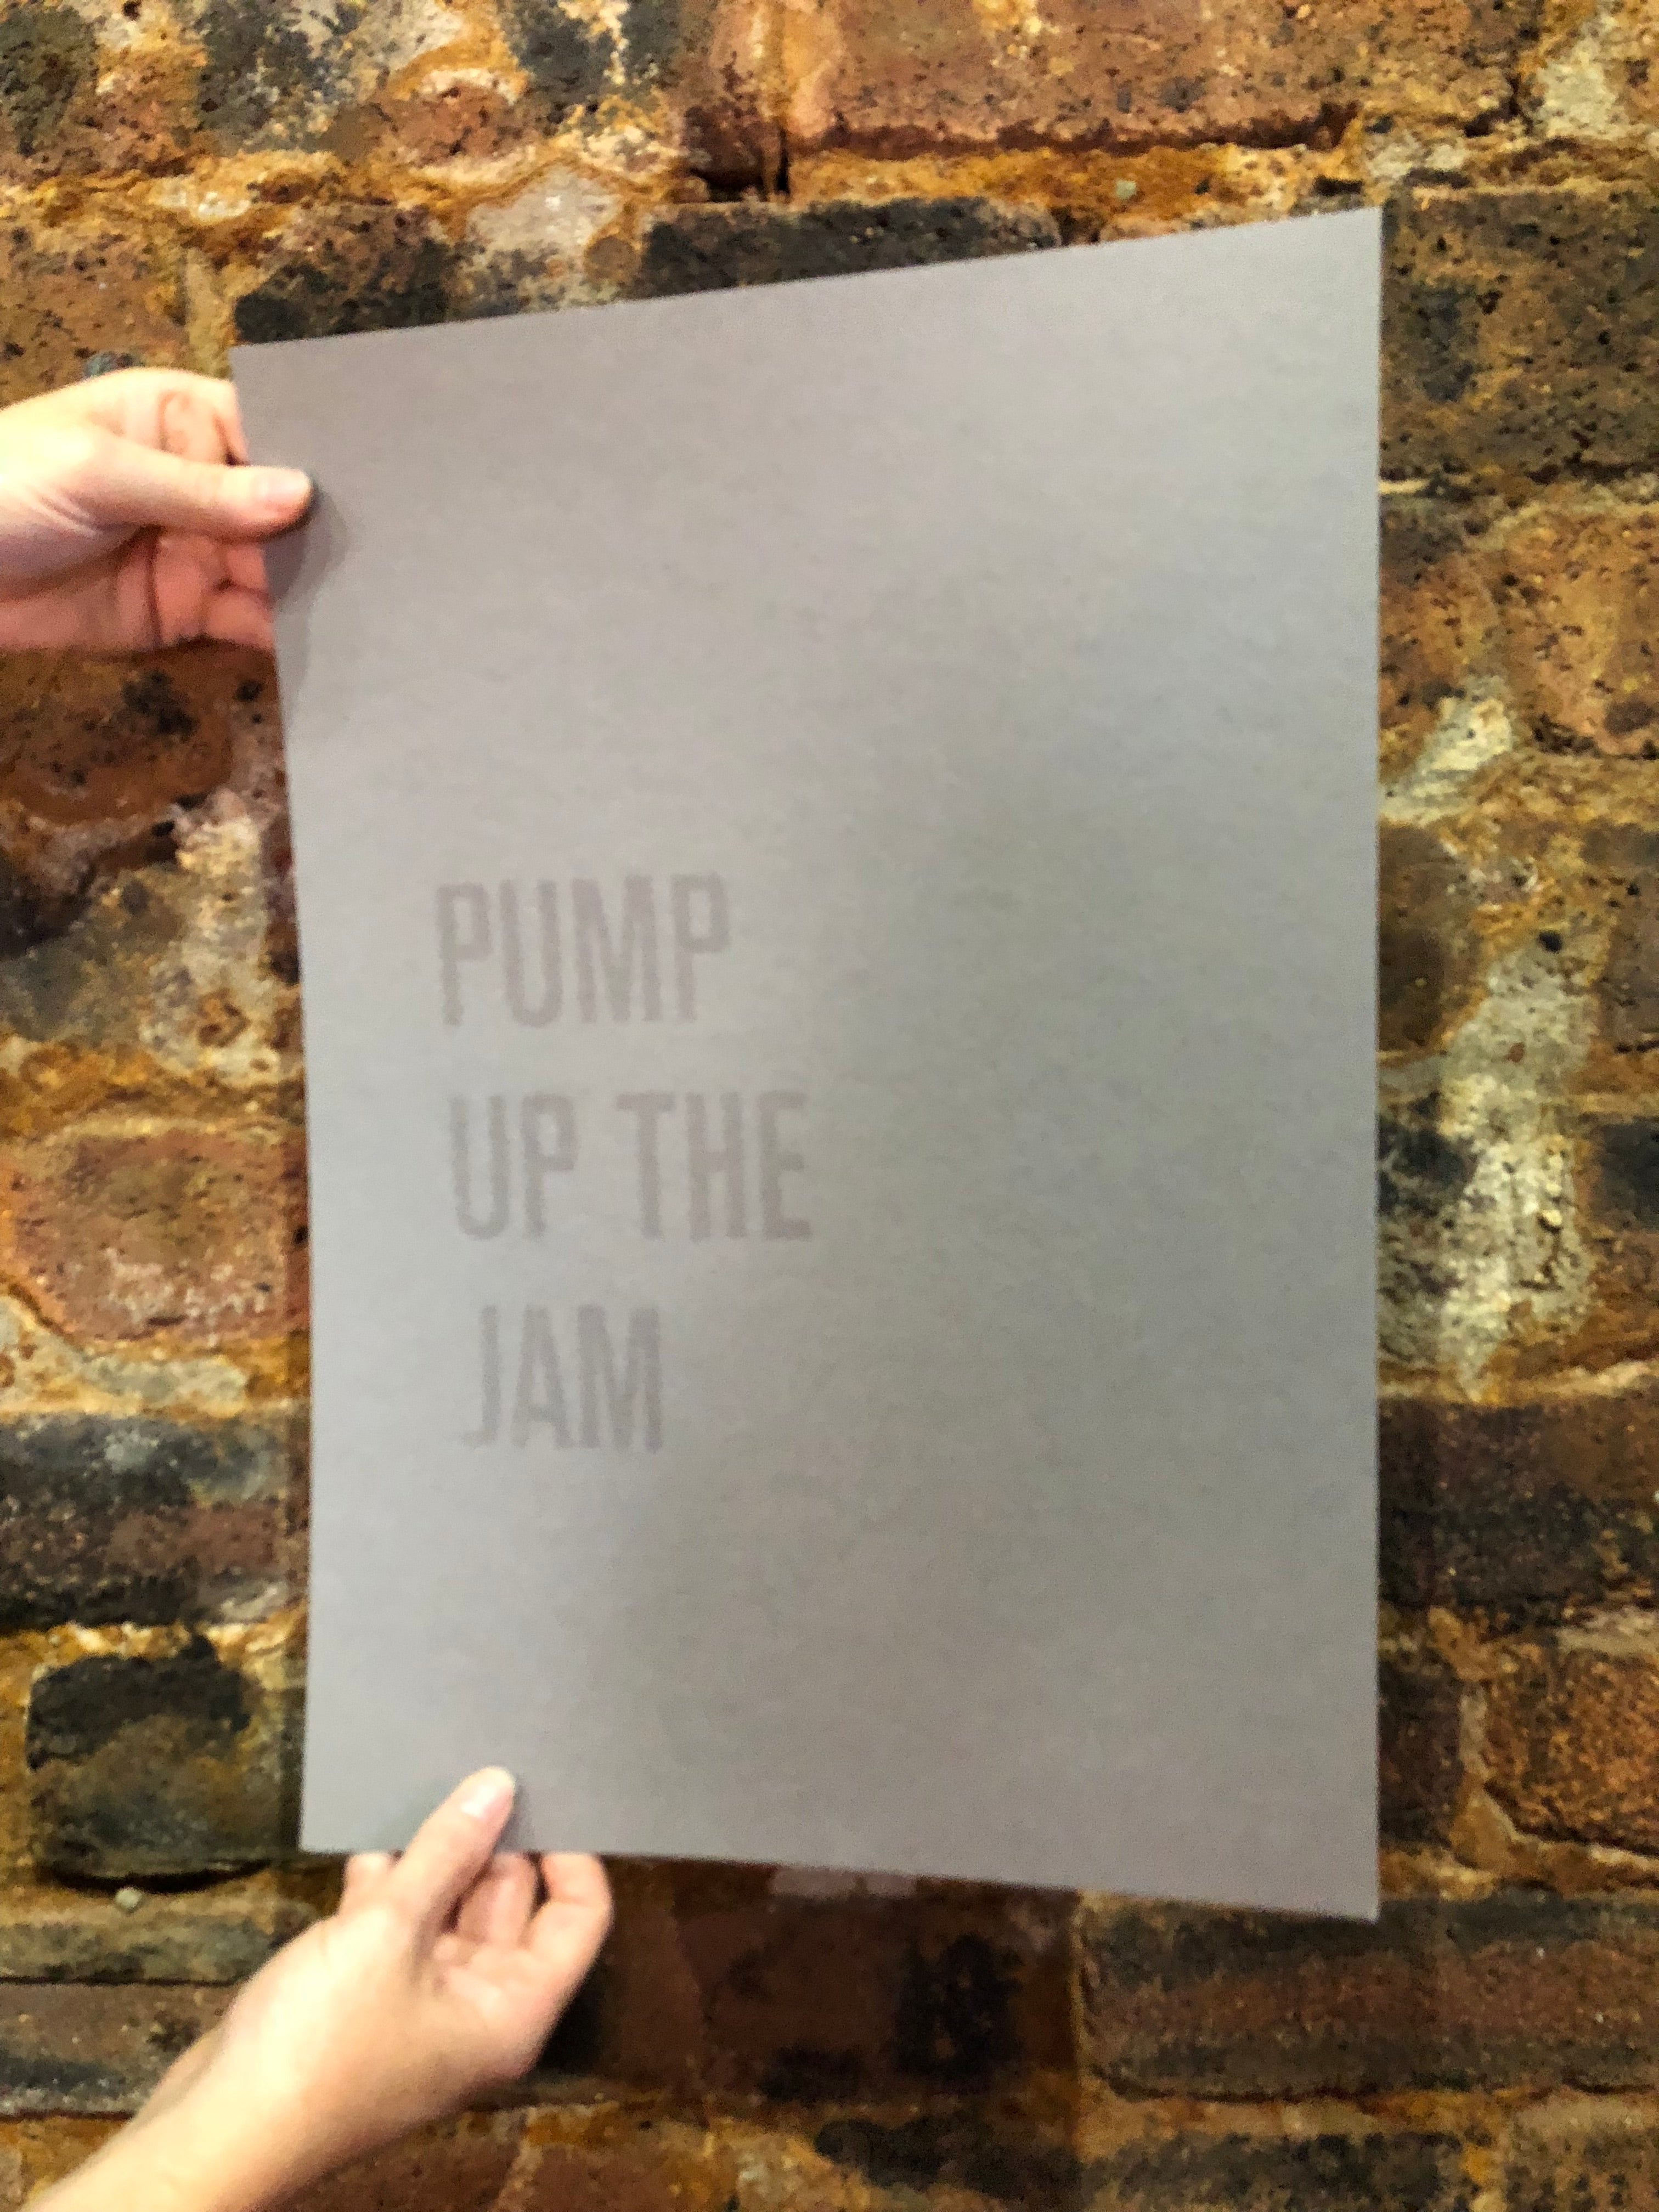 Pump Up The Jam - A3 Hand Screen Print